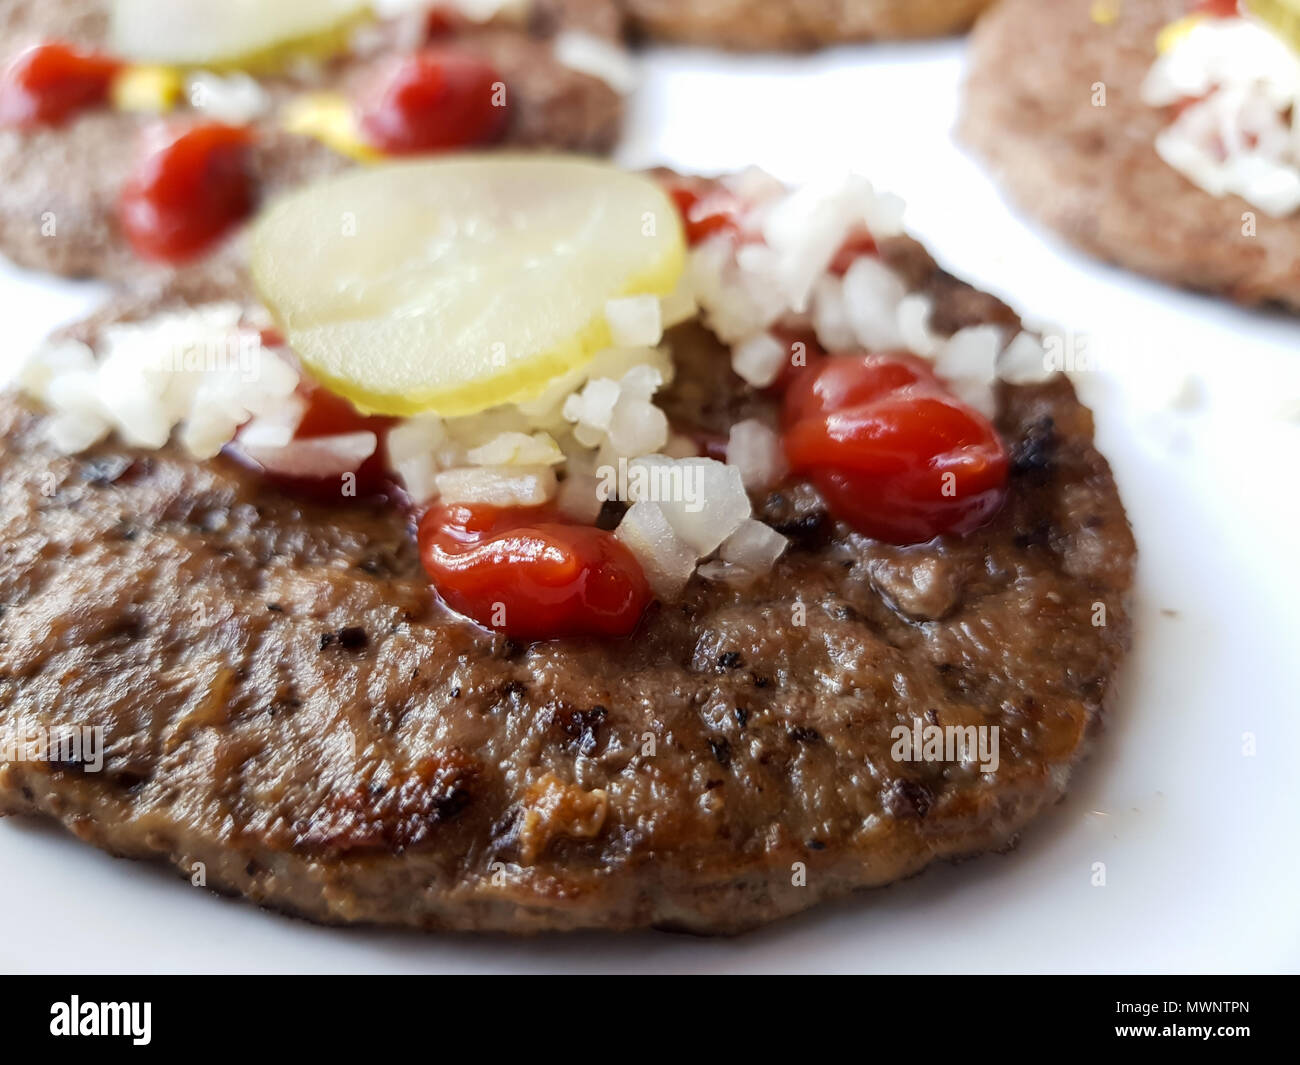 Beef hamburger steak served on plate Stock Photo